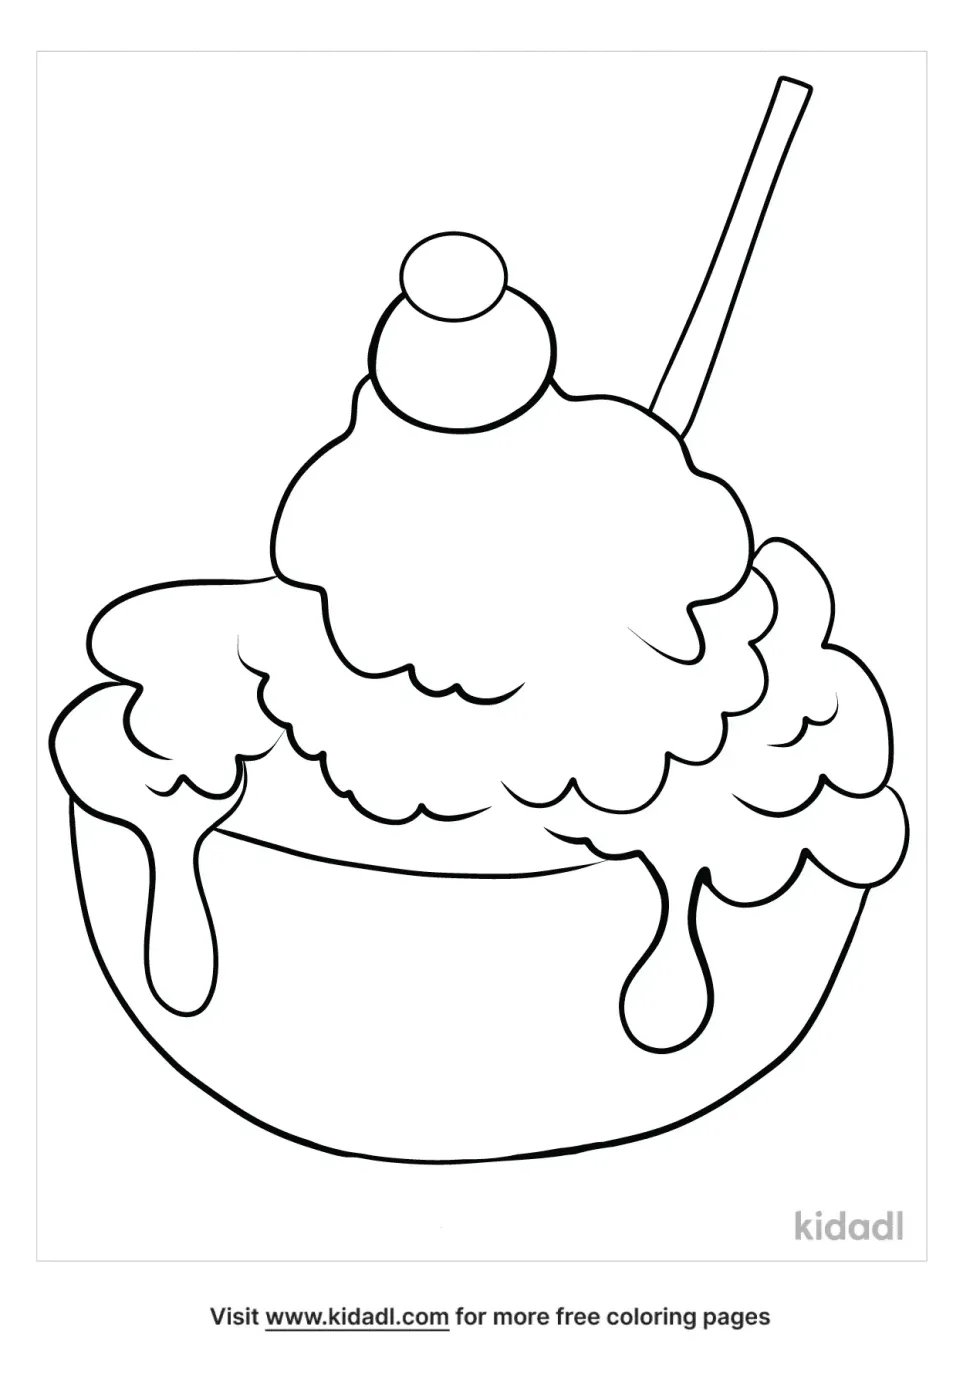 Ice Cream In A Bowl